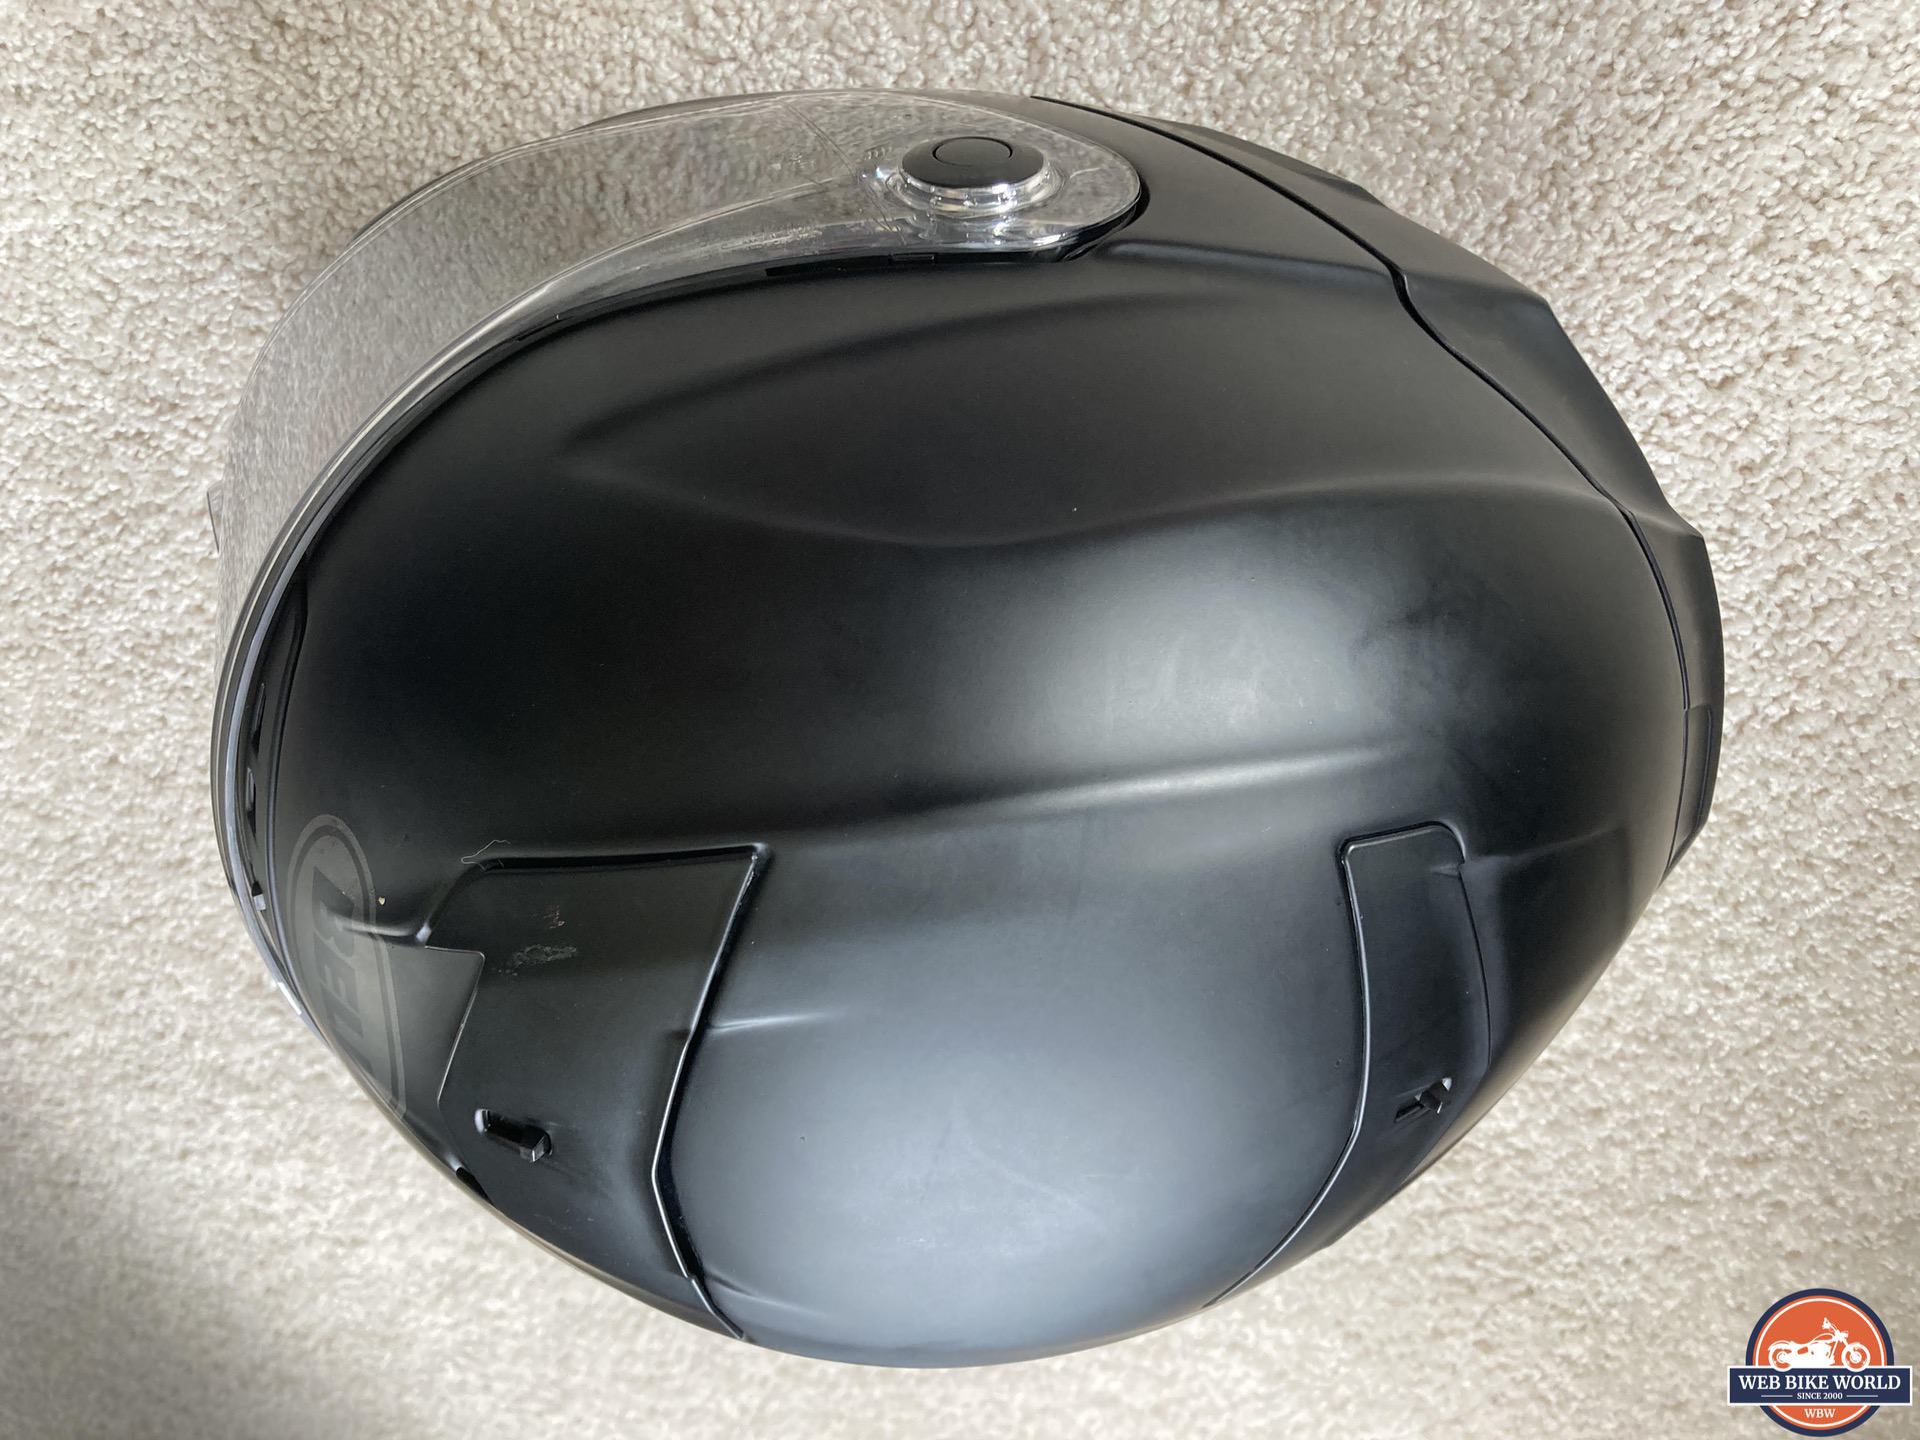 Top view of Bell Star DLX MIPS helmet